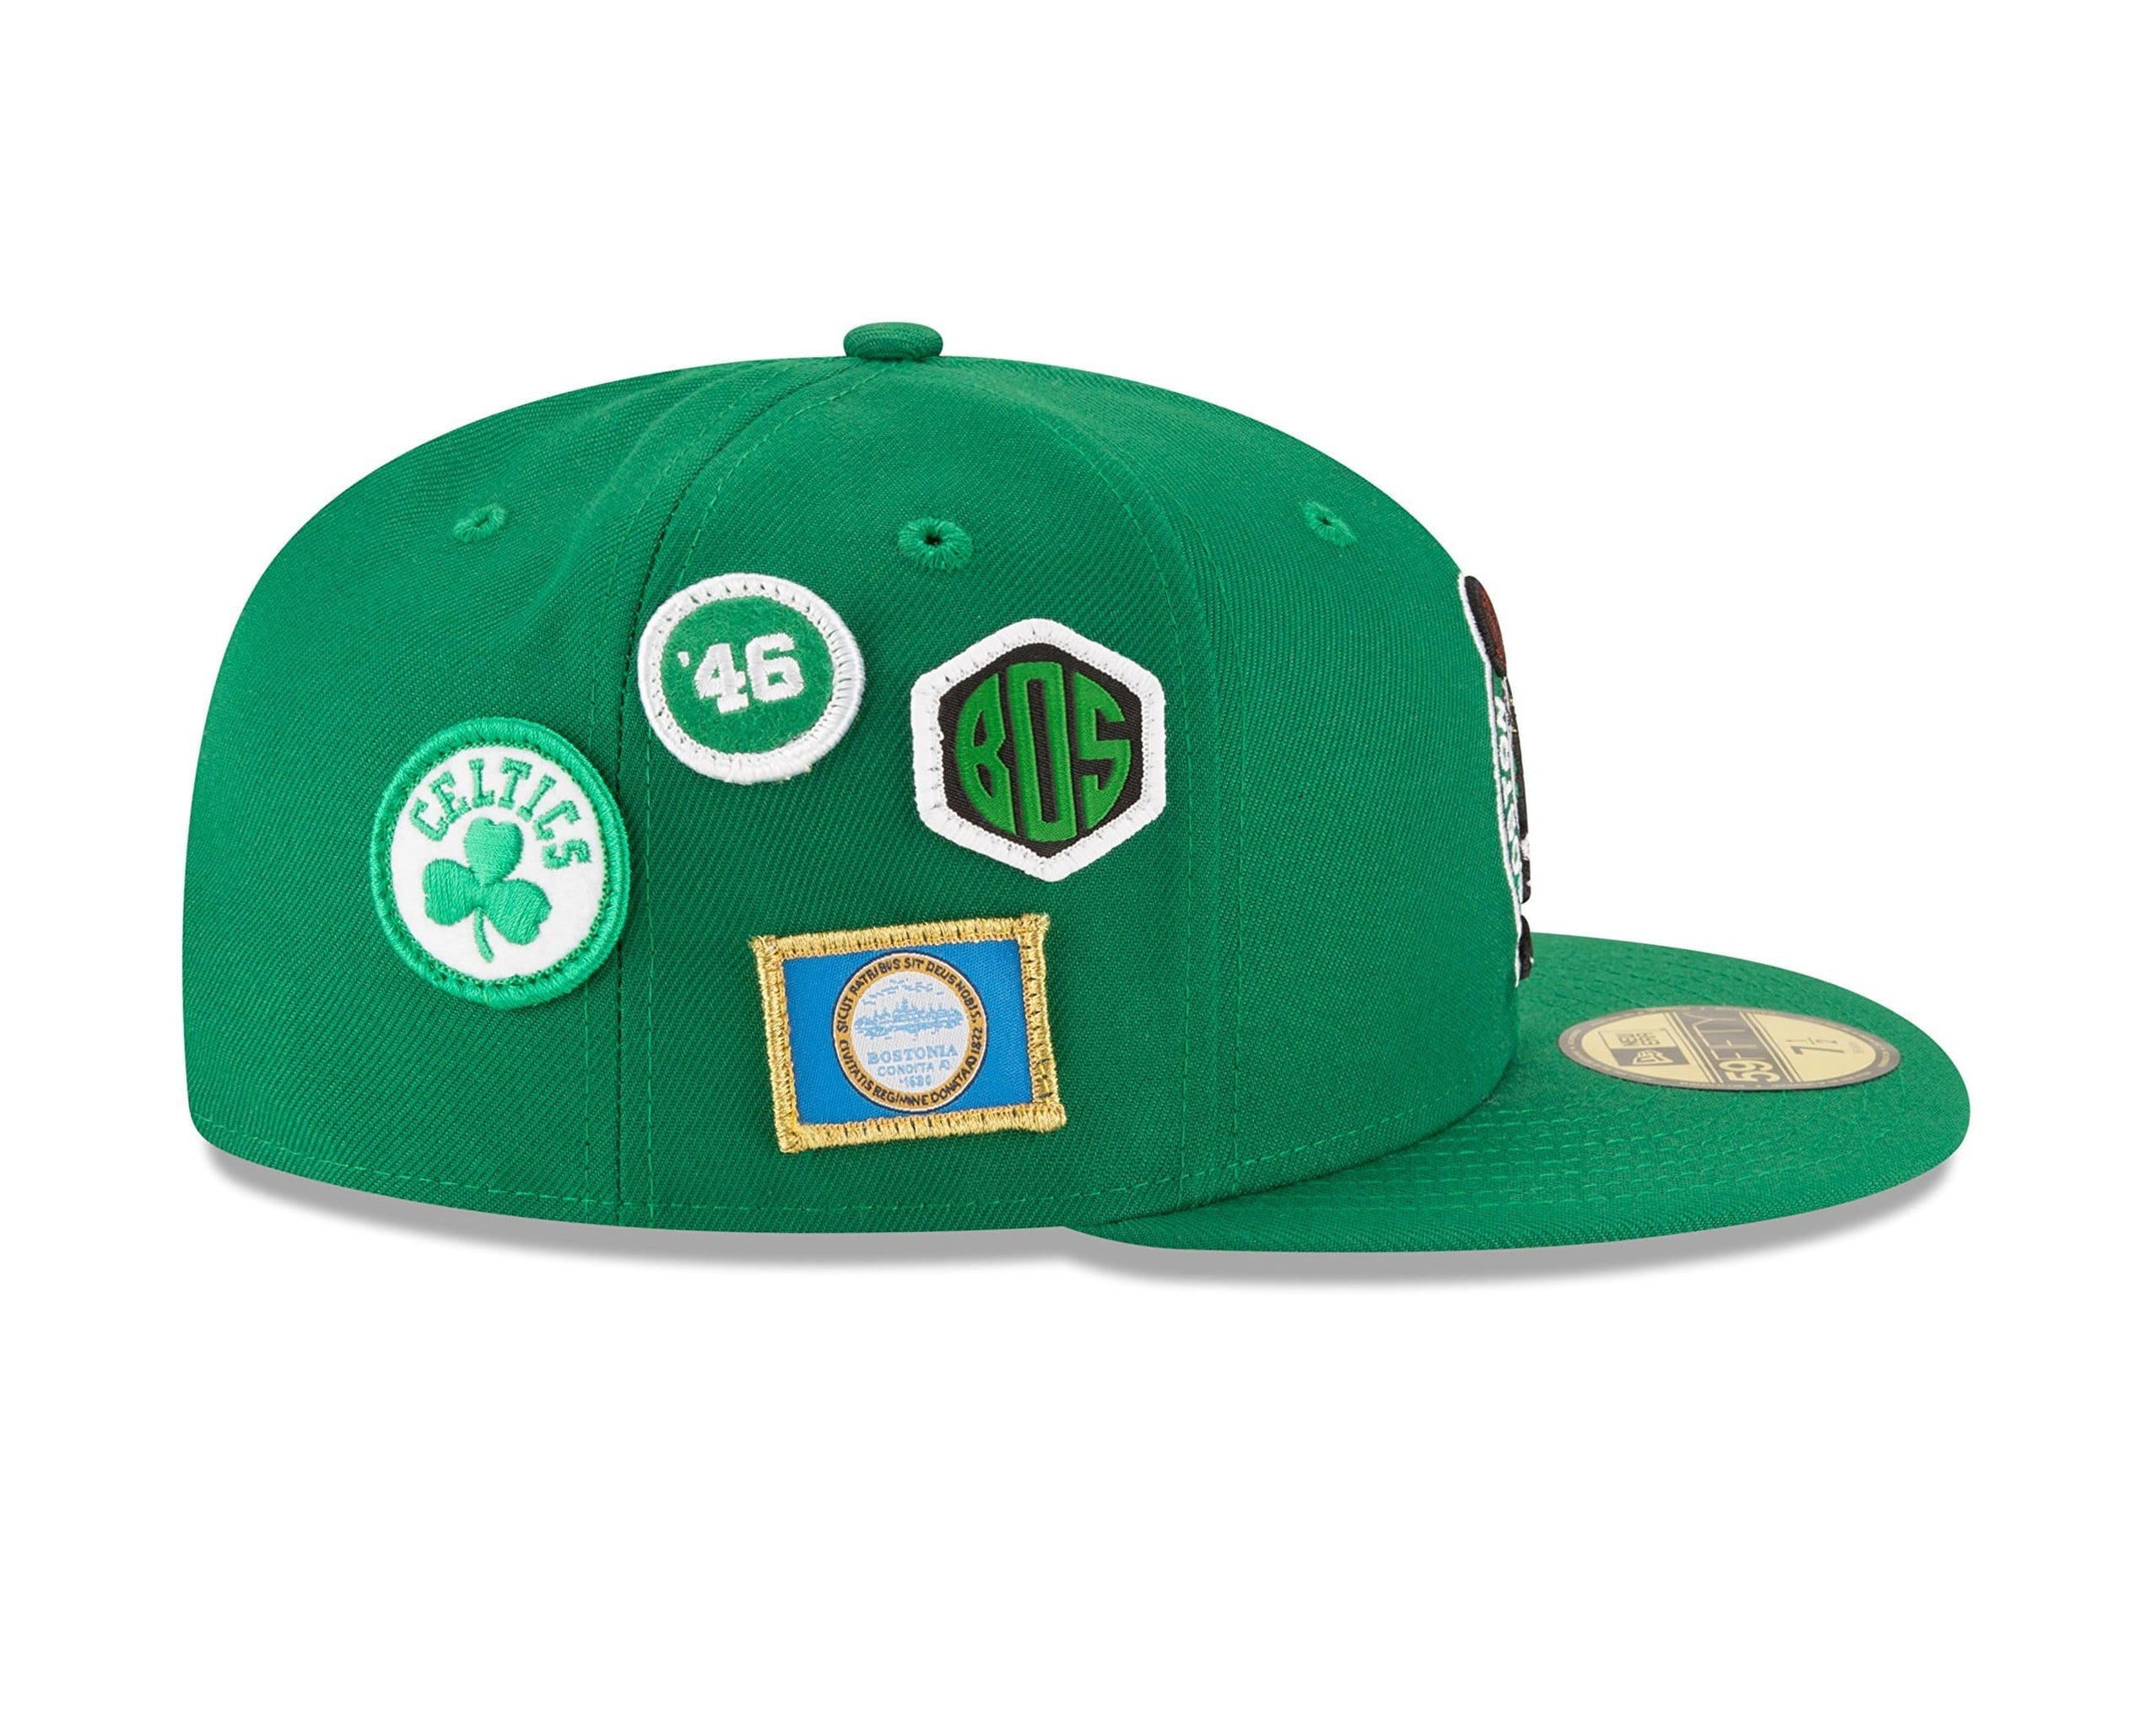 Celtics championship hat